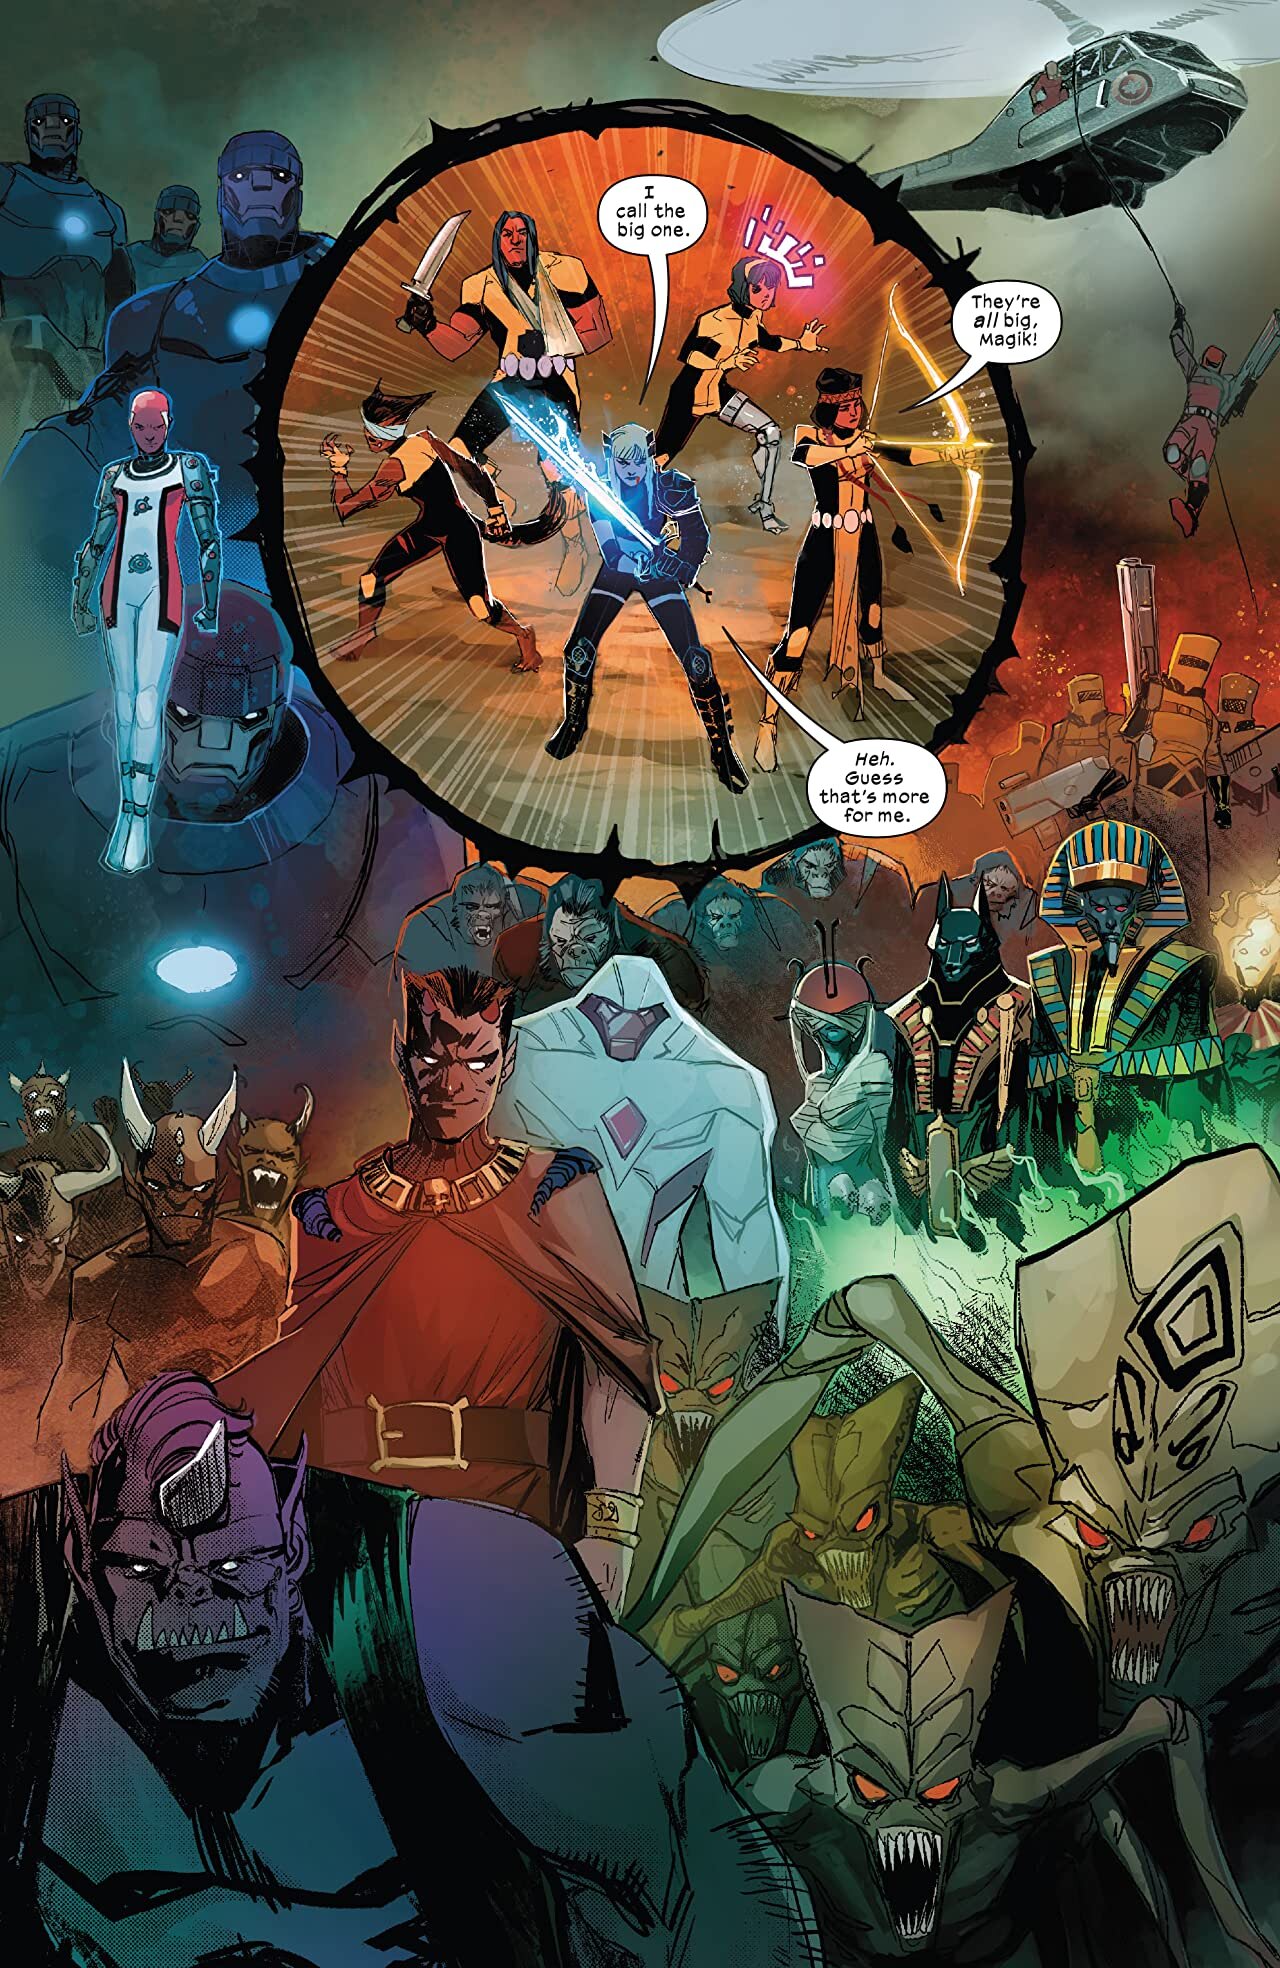 New Mutants by Vita Ayala Vol. 2